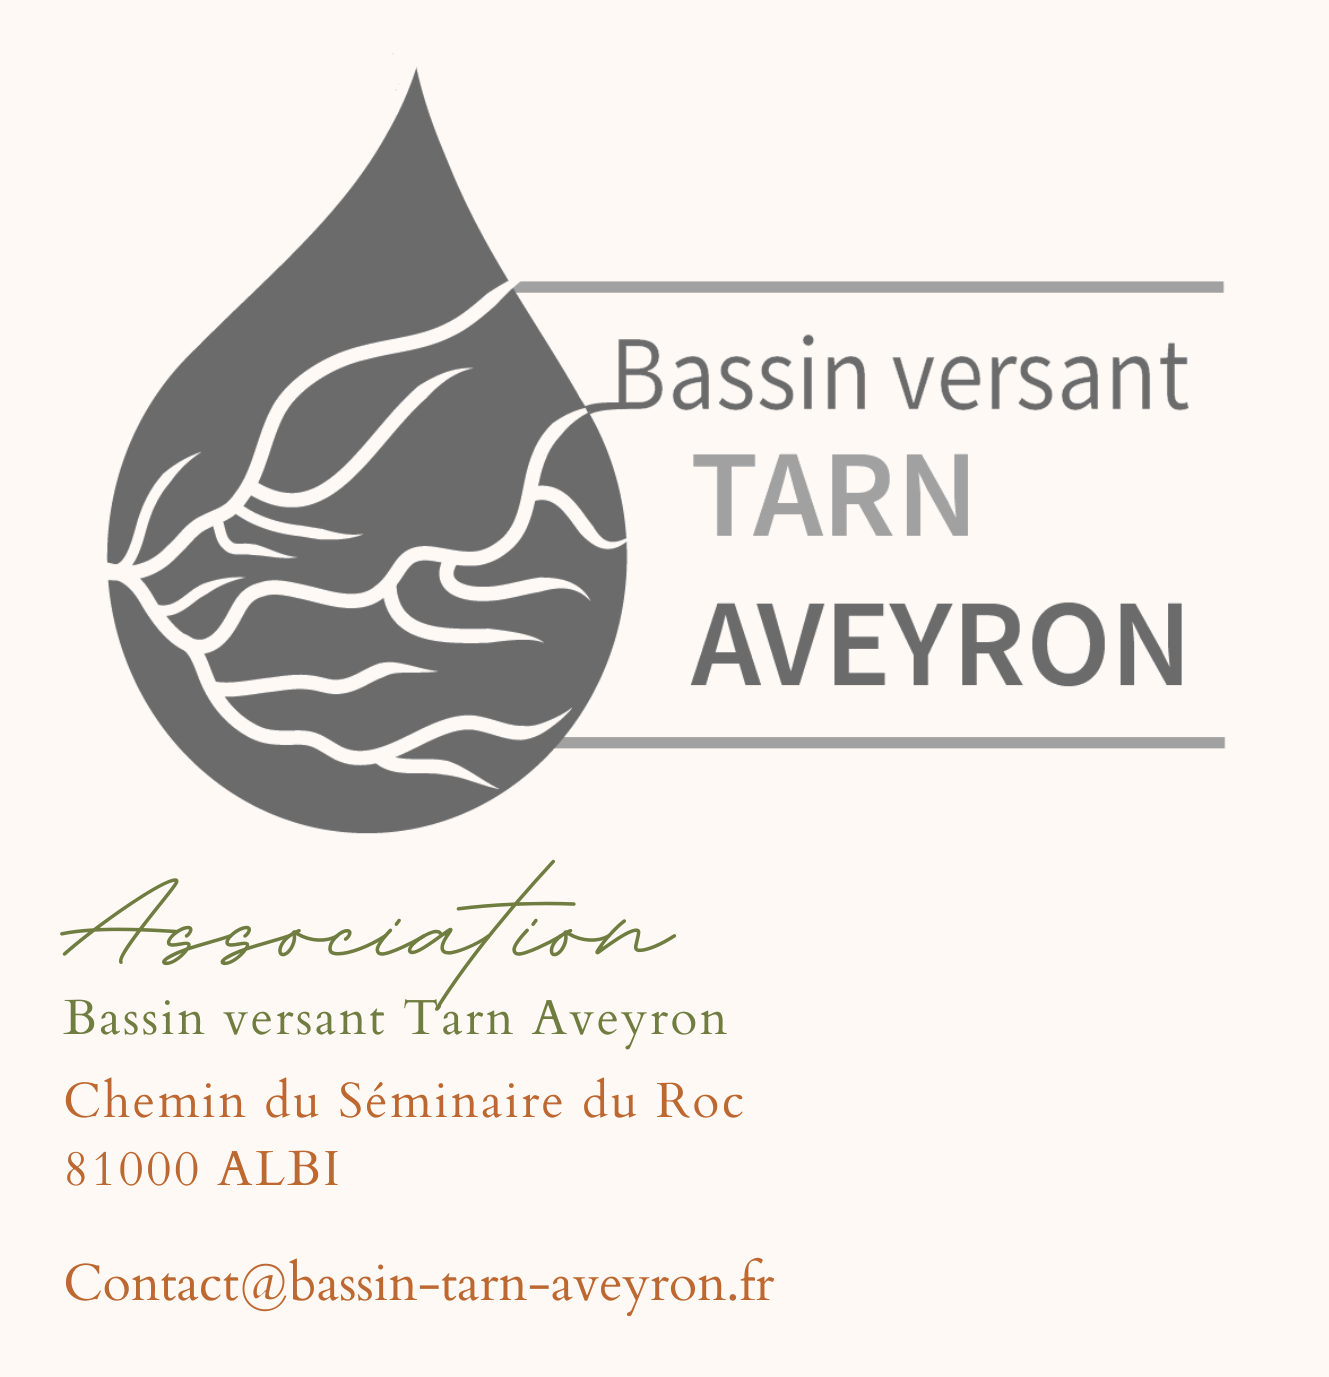 Contact tarn aveyron2